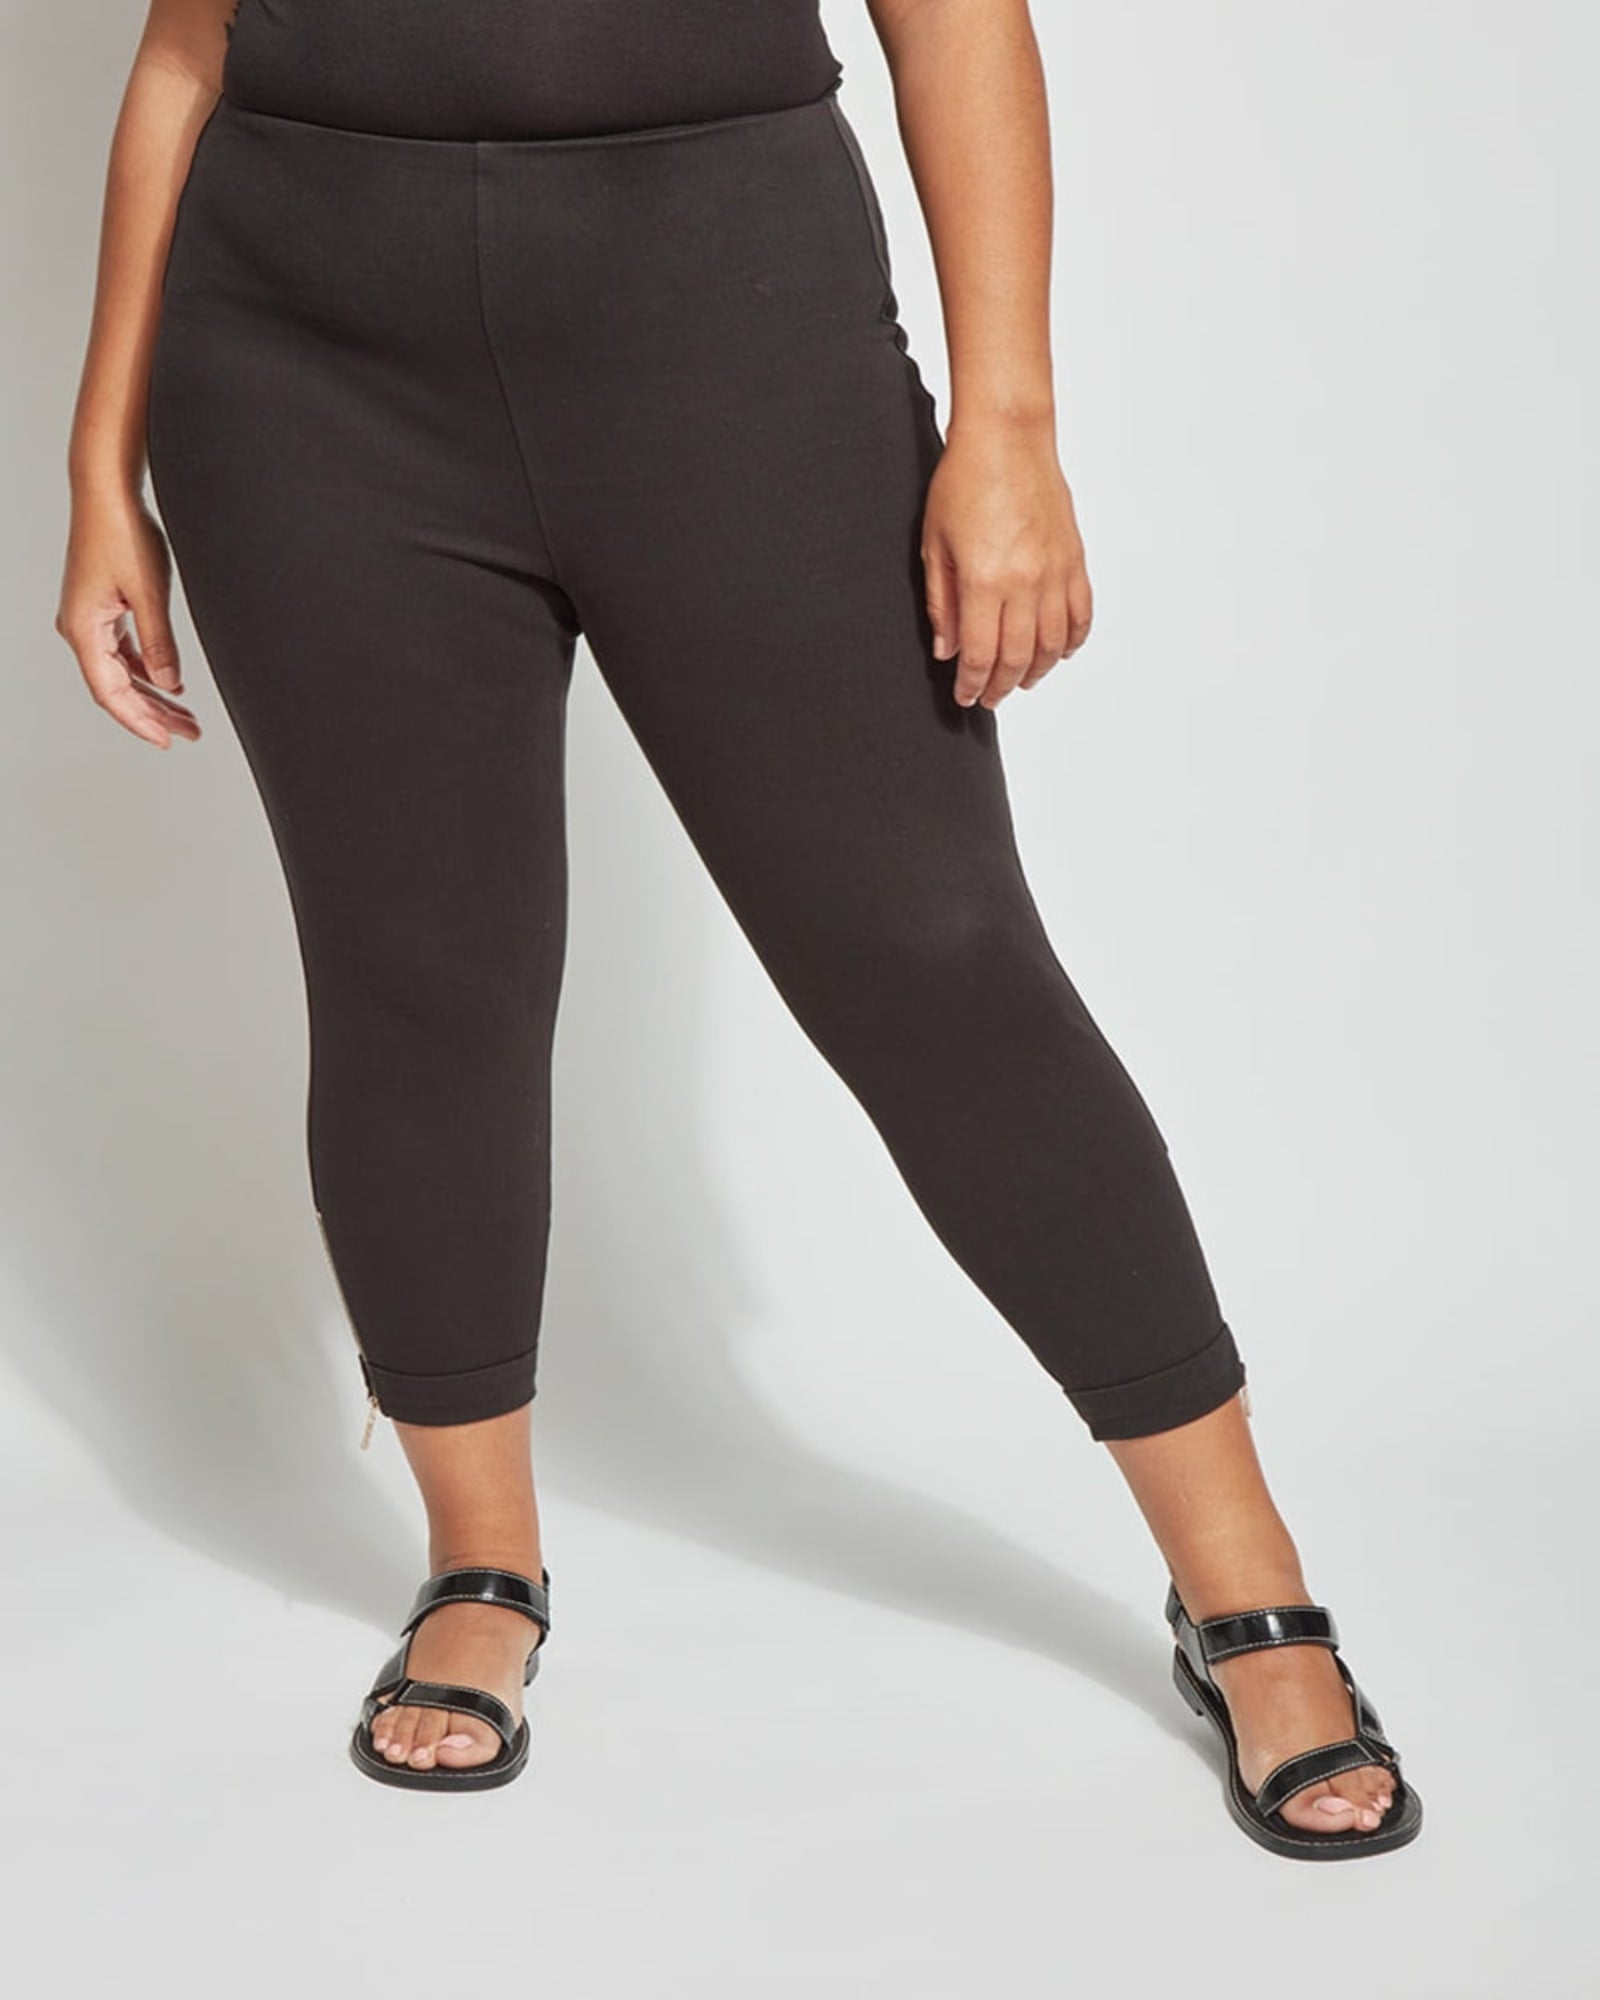 Shop Pants & Leggings - New Arrivals - Plus Size clothing – REBDOLLS